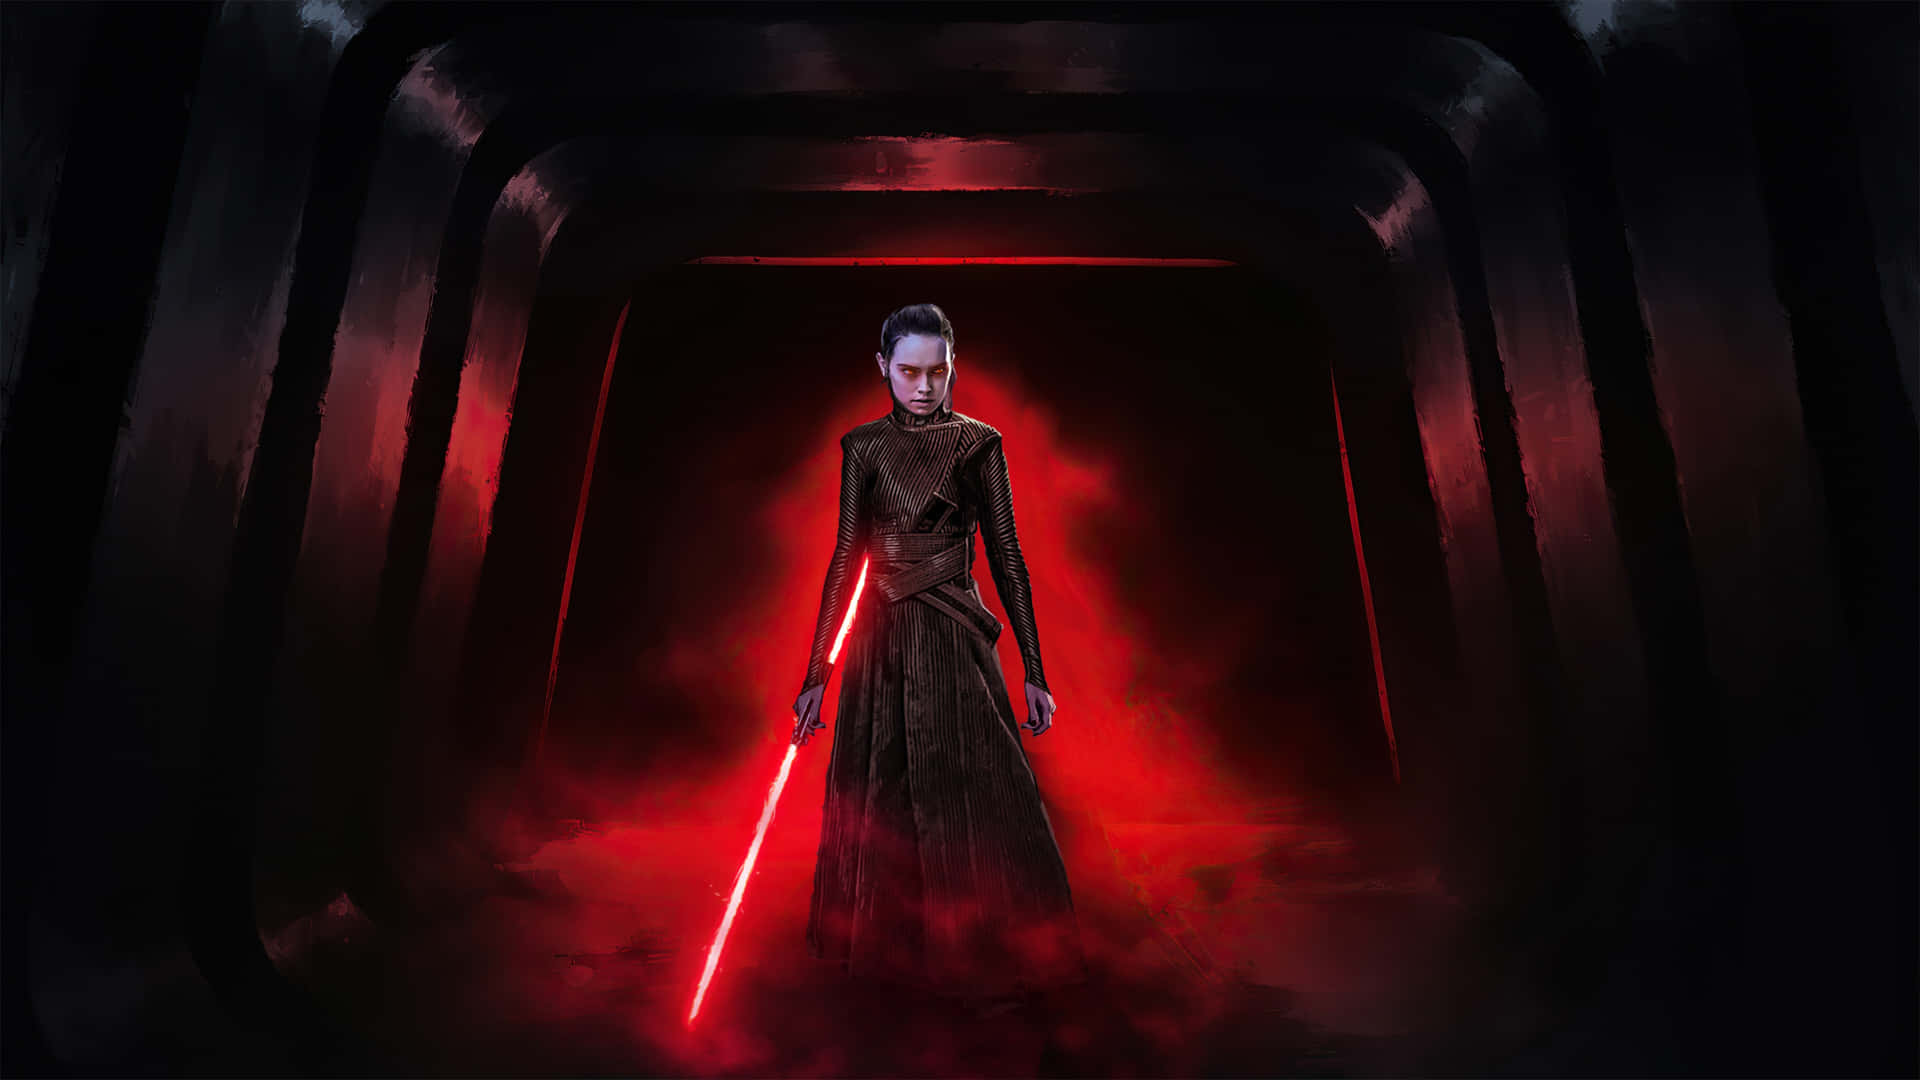 Dark so powerful - Sith Lord Wallpaper